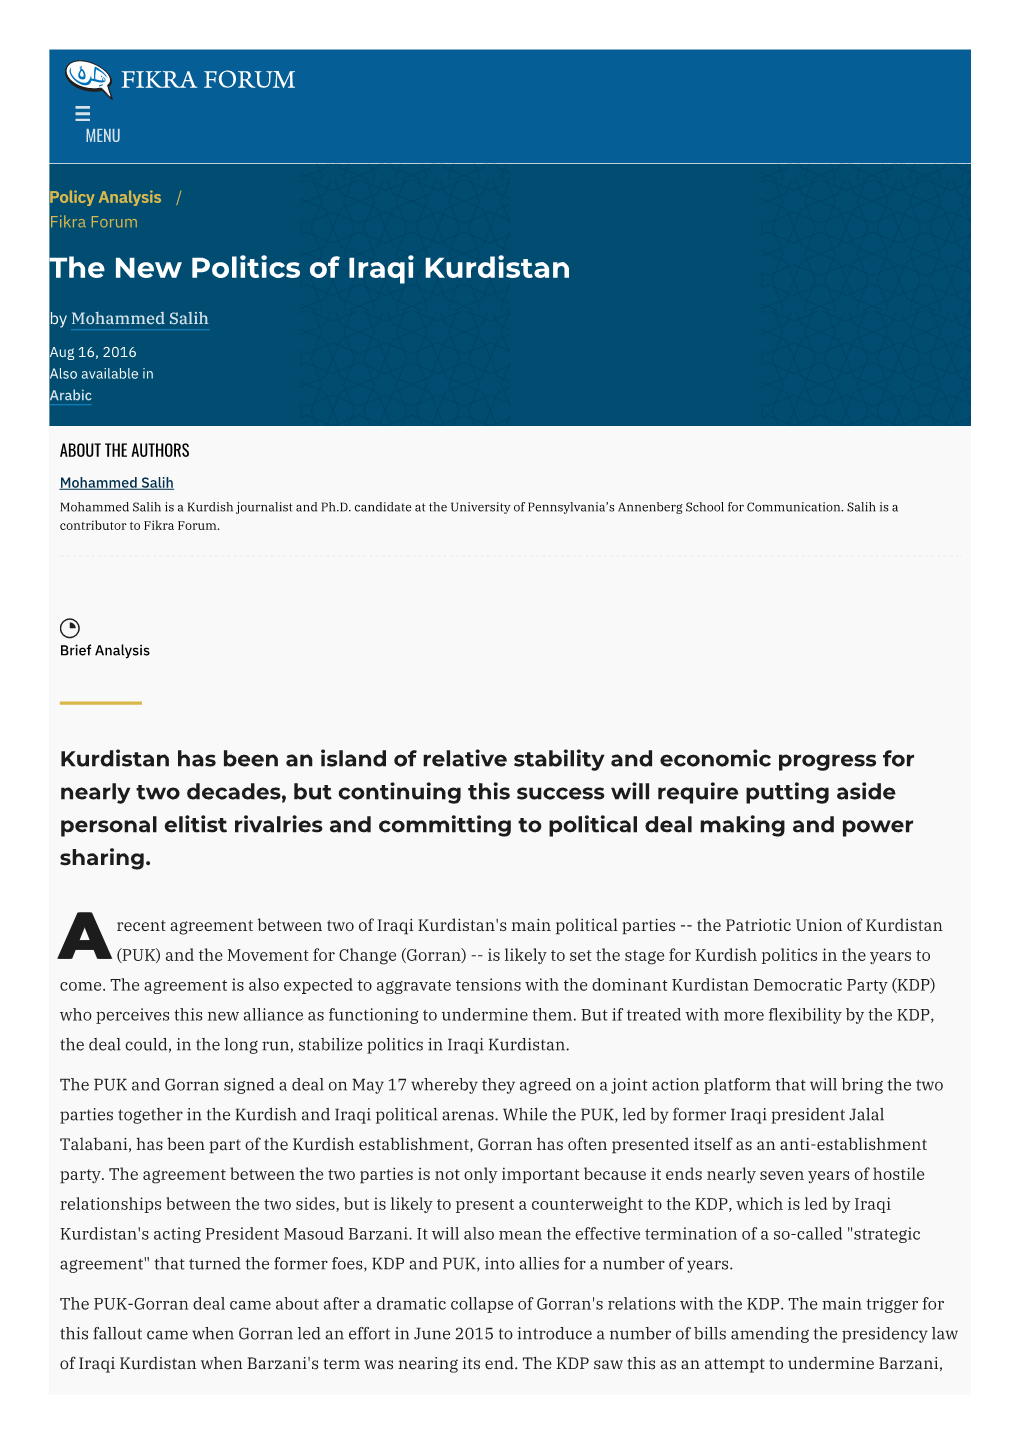 The New Politics of Iraqi Kurdistan | the Washington Institute